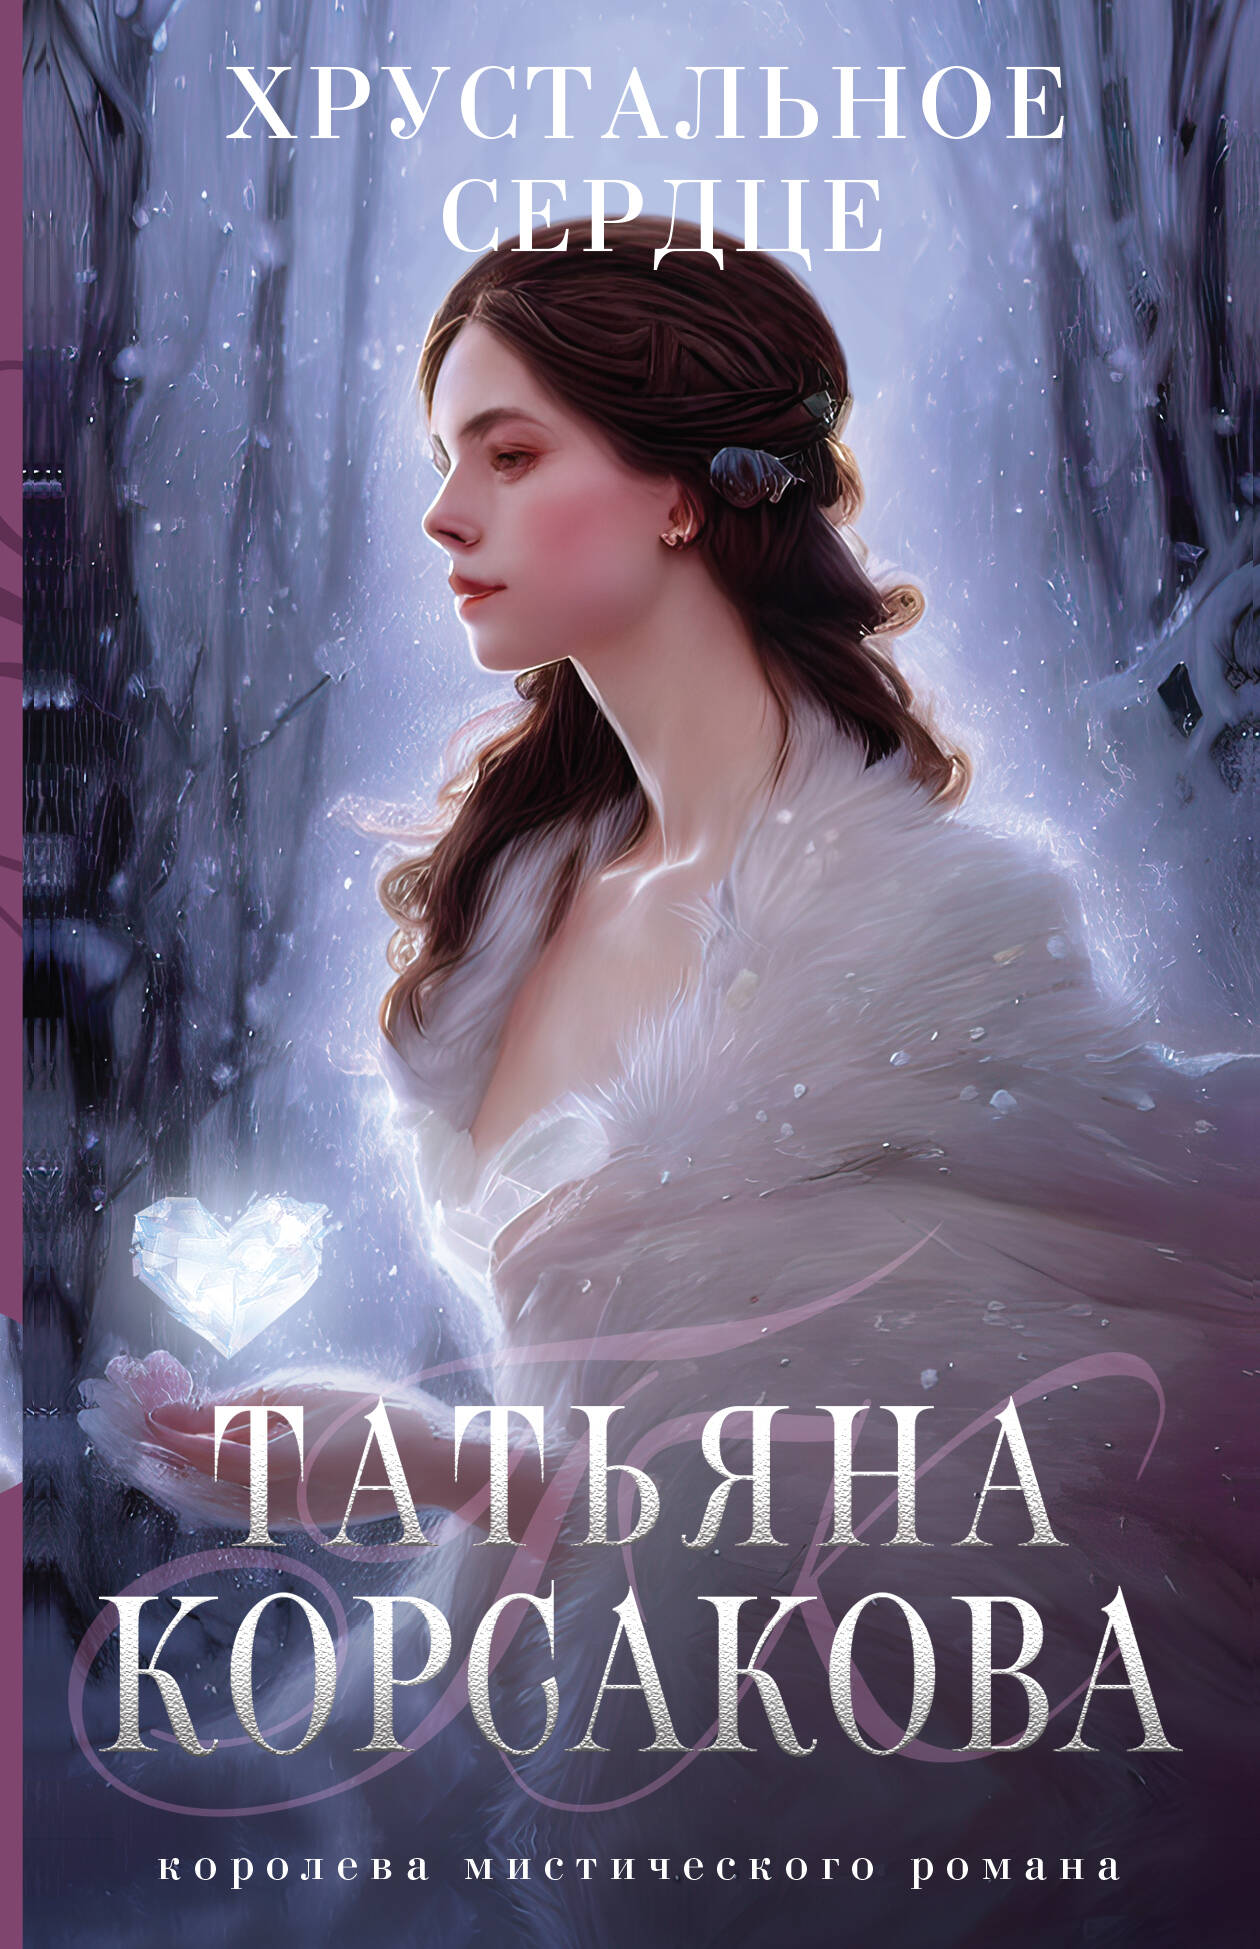 Корсакова Татьяна - Хрустальное сердце